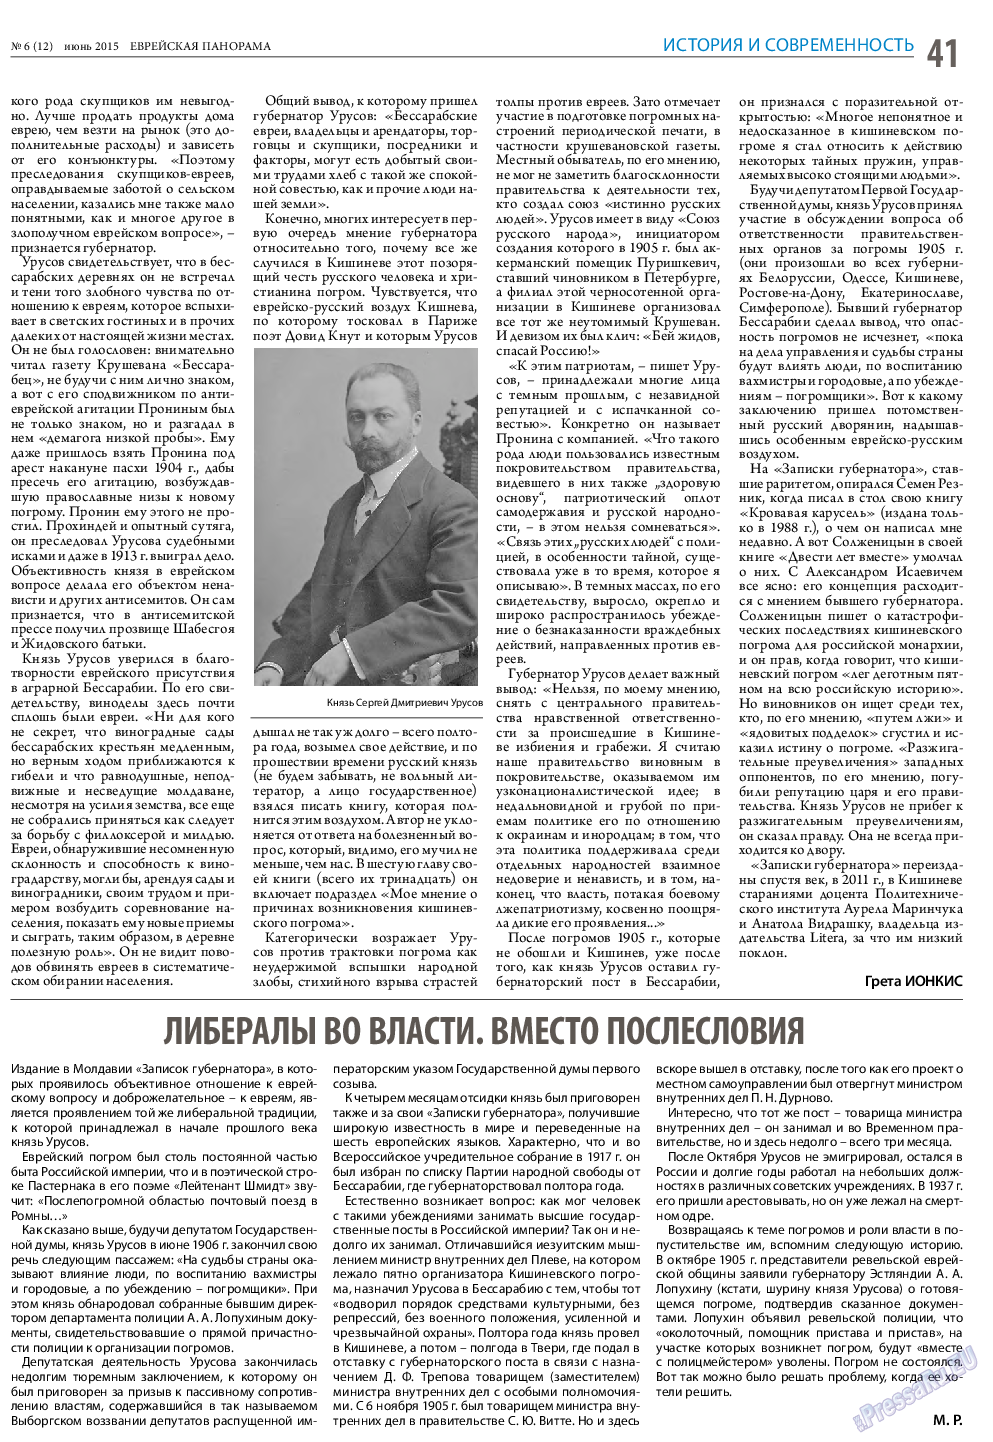 Еврейская панорама, газета. 2015 №6 стр.41